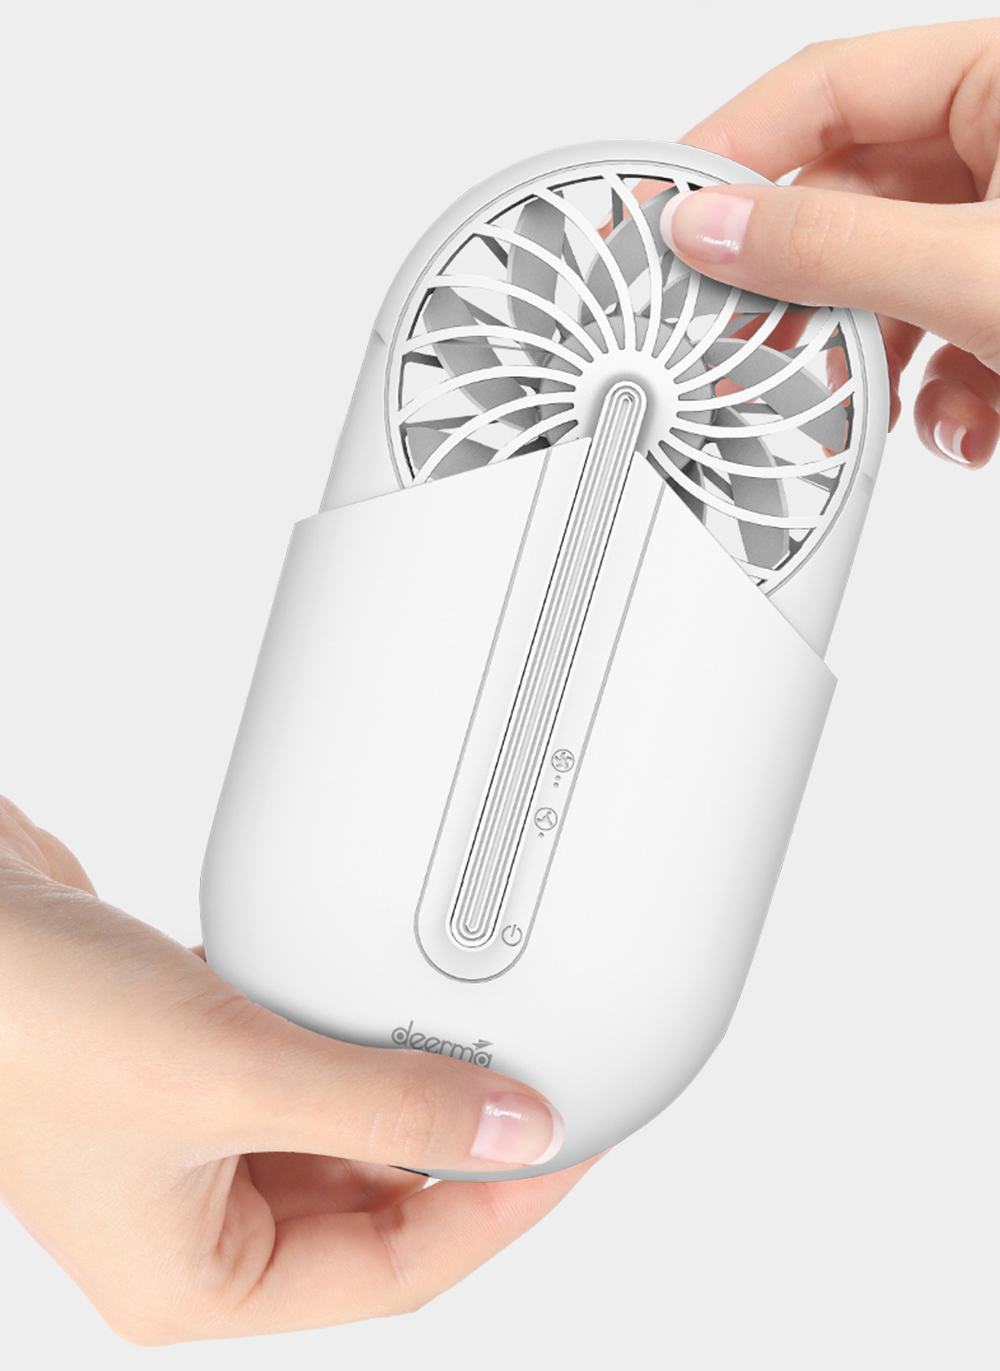 Deerma Portable Handheld Fan with Aromatherapy